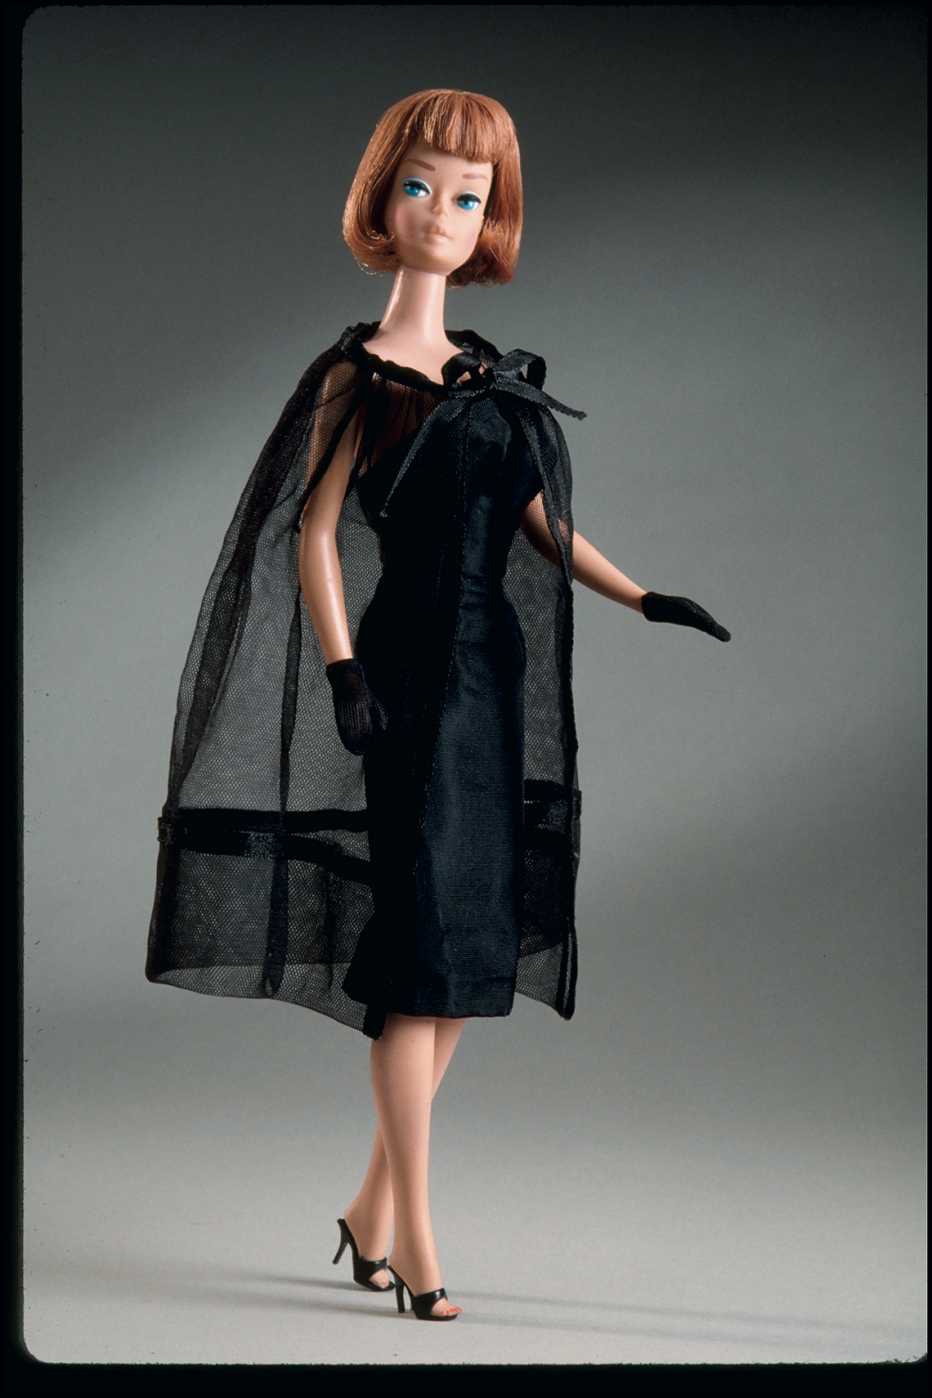 a barbie doll wearing a black cocktail dress